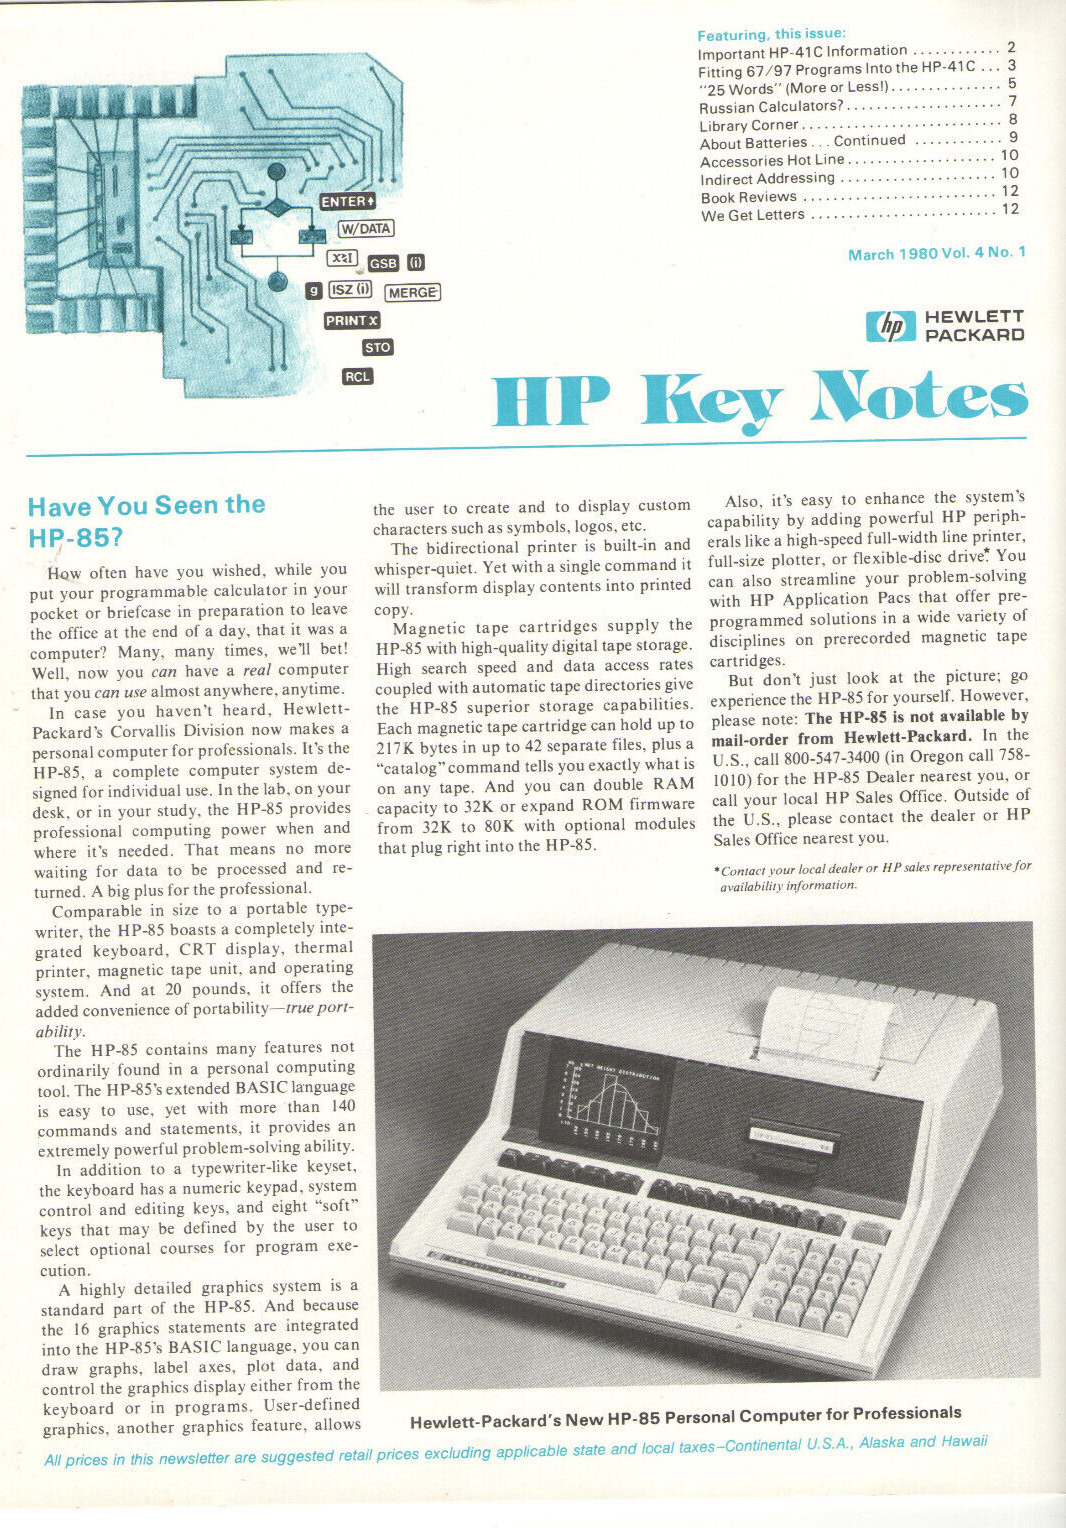 VTG 1980 HEWLETT-PACKARD MAGAZINE INTRODUCING THE NEW HP-85 PERSONAL COMPUTER